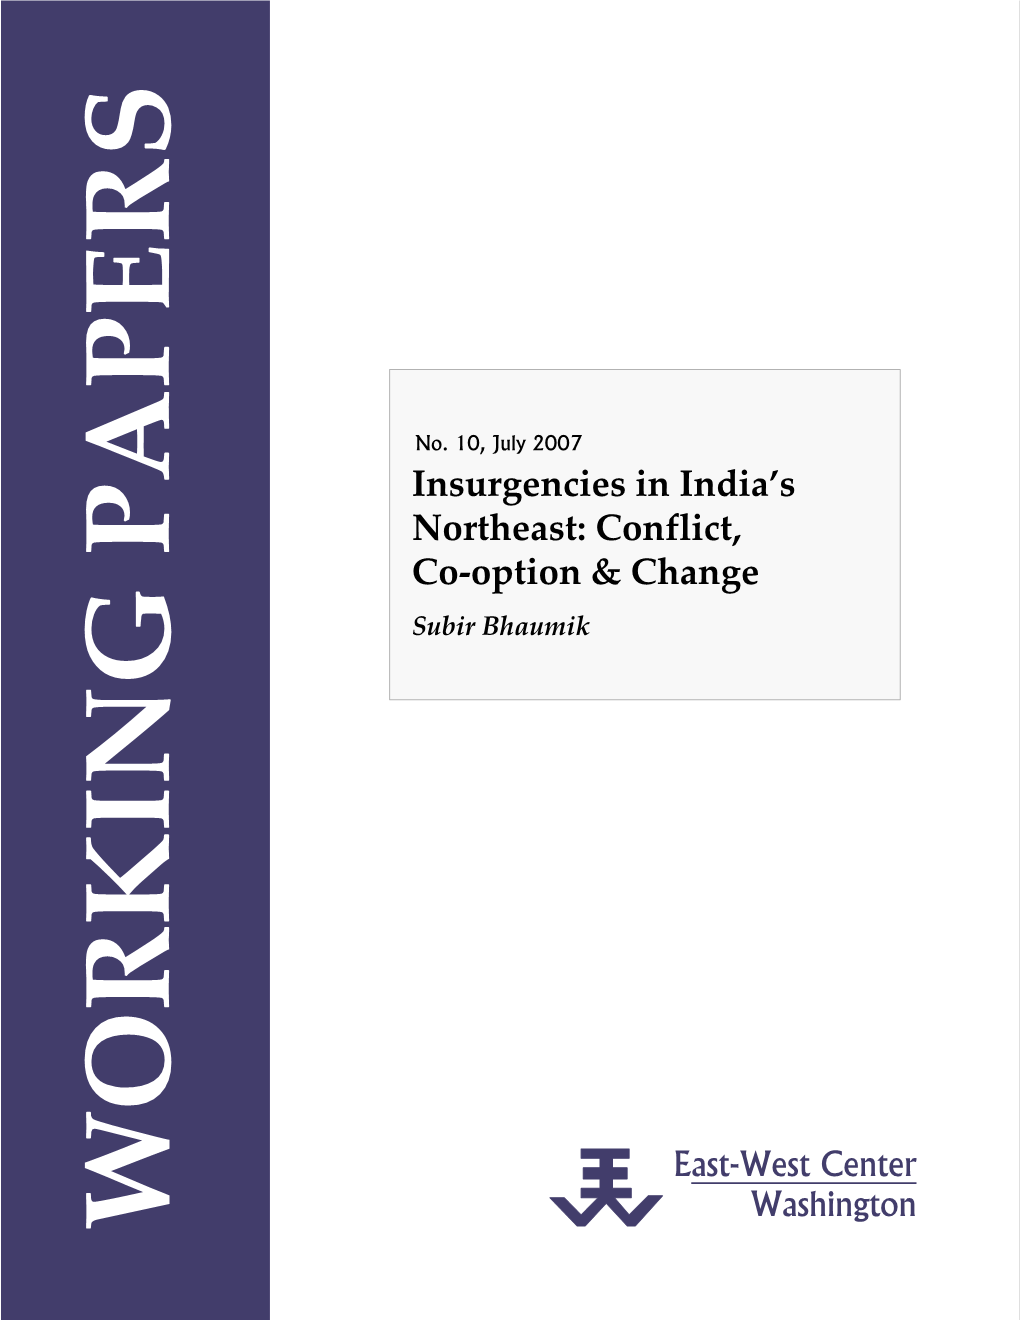 Insurgencies in India's Northeast: Conflict, Co-Option & Change